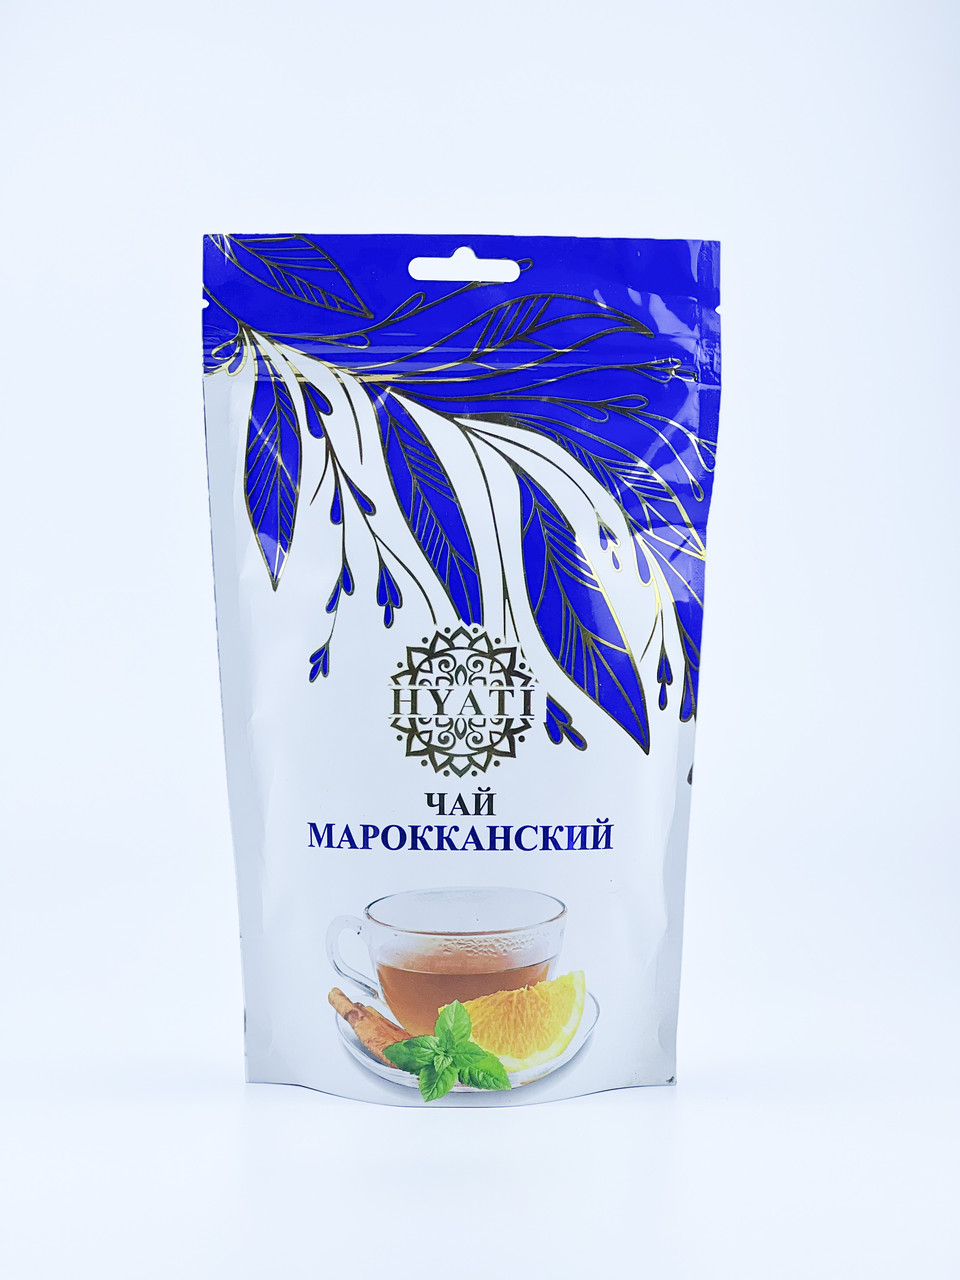 Чай "Марокканский" от бренда "Hyati".